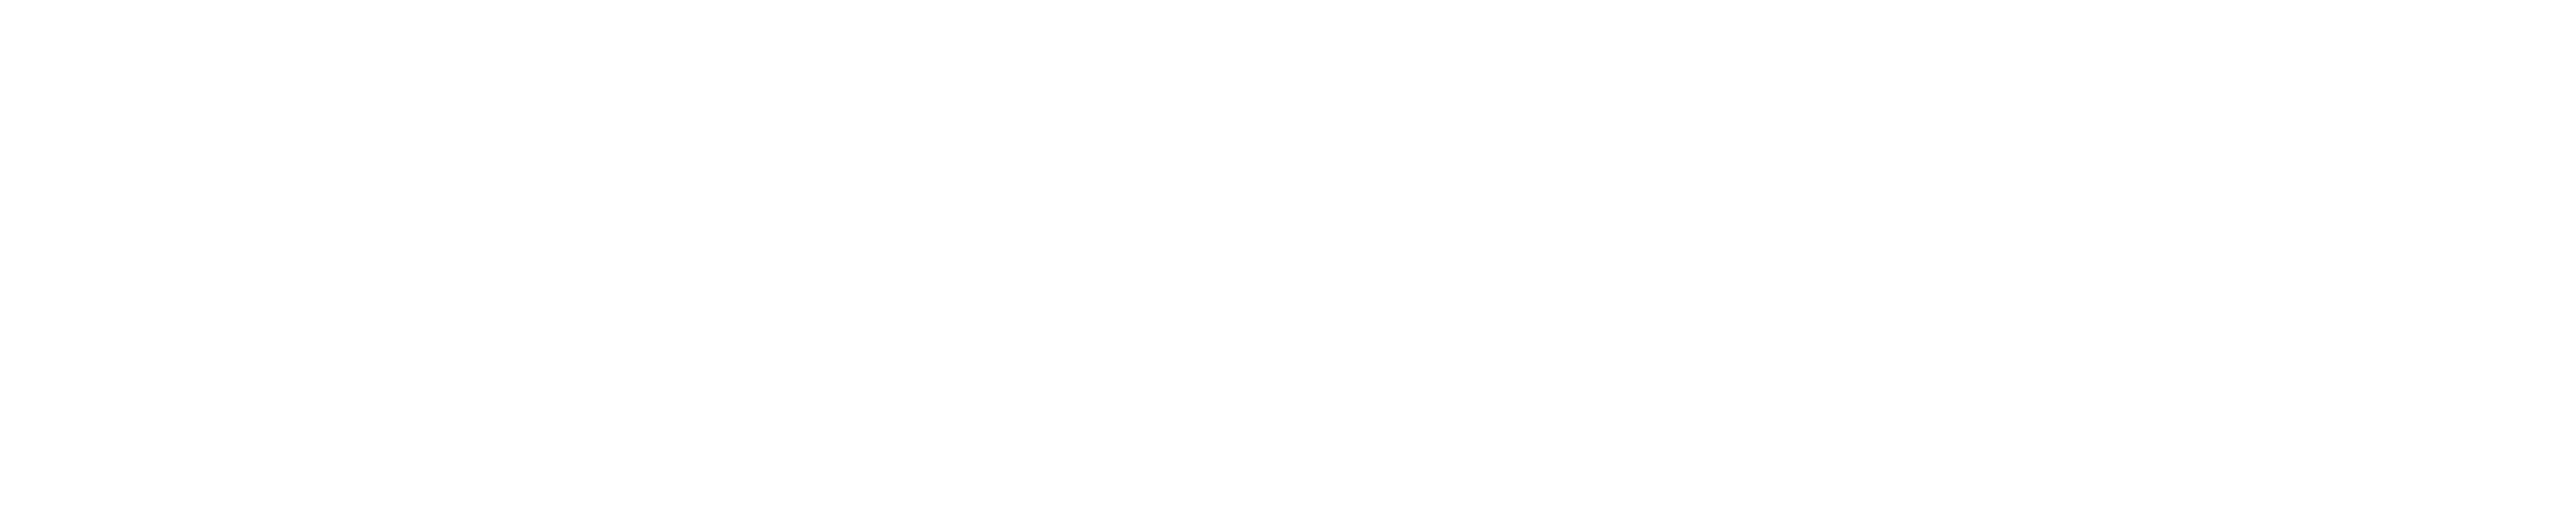 edvisorly-logo-white